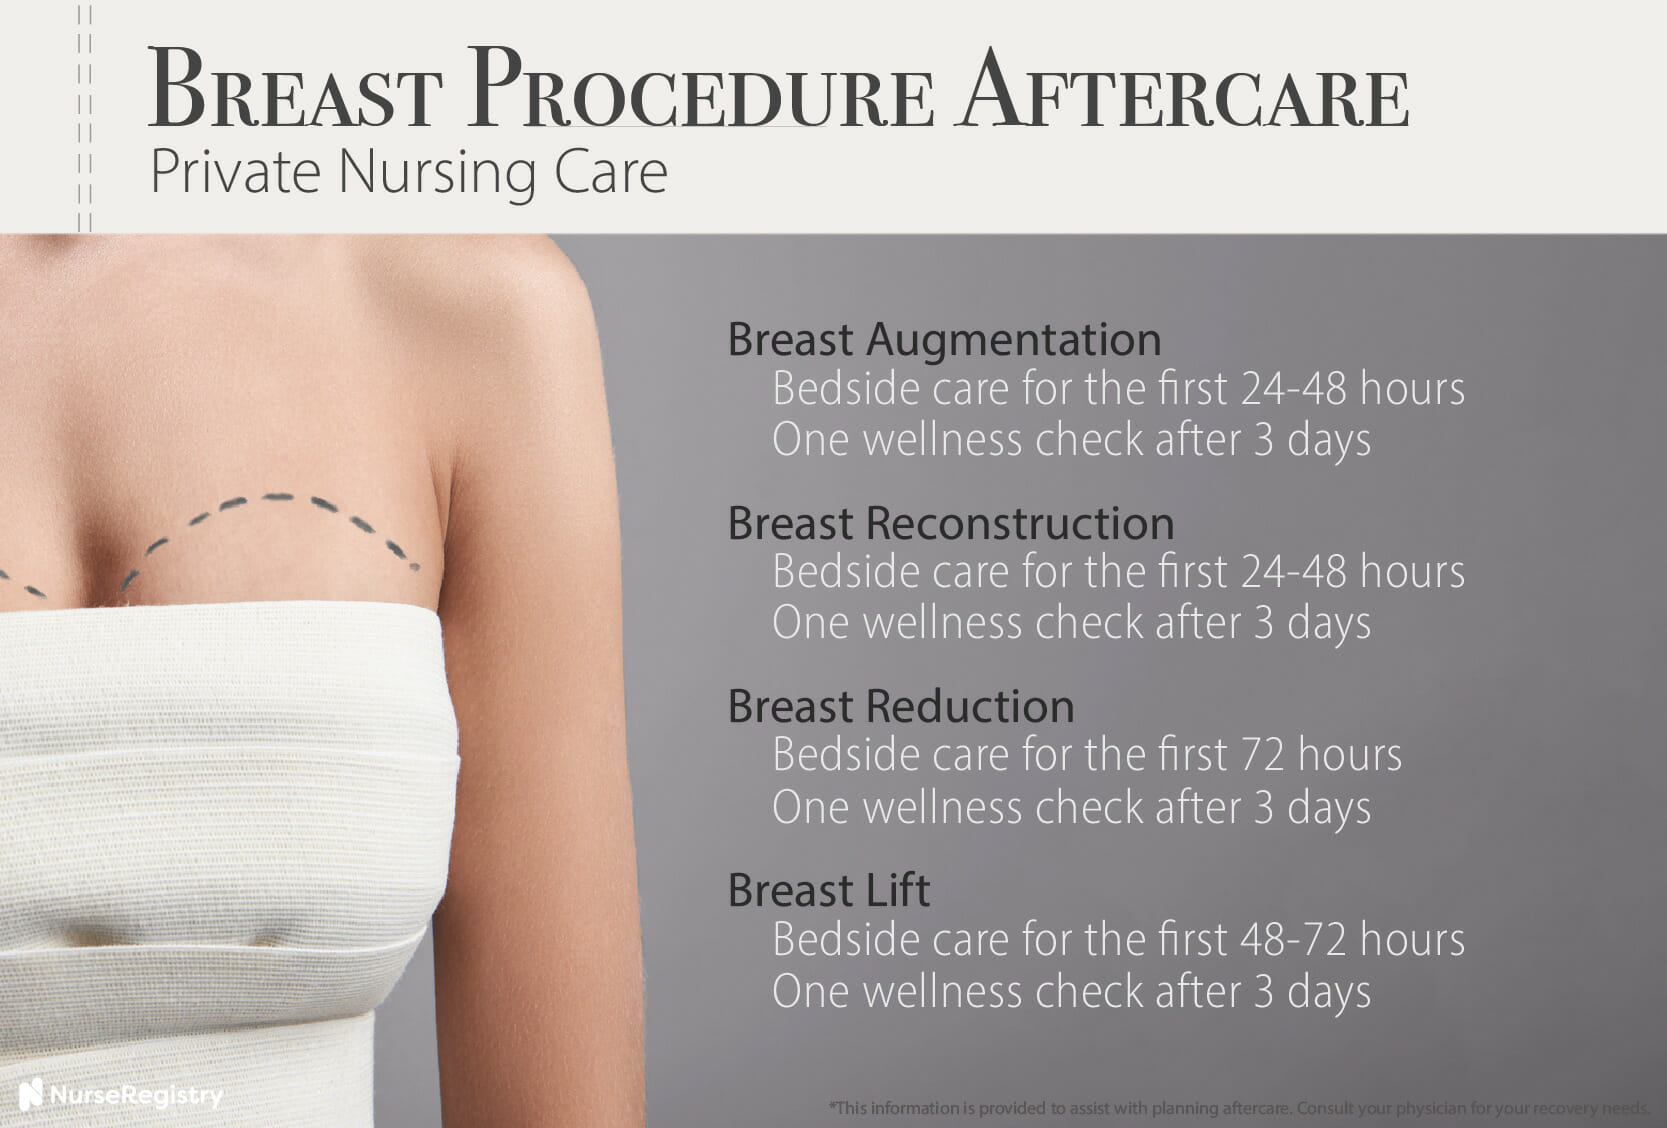 Breast Lift Post-Operative Patient Instructions